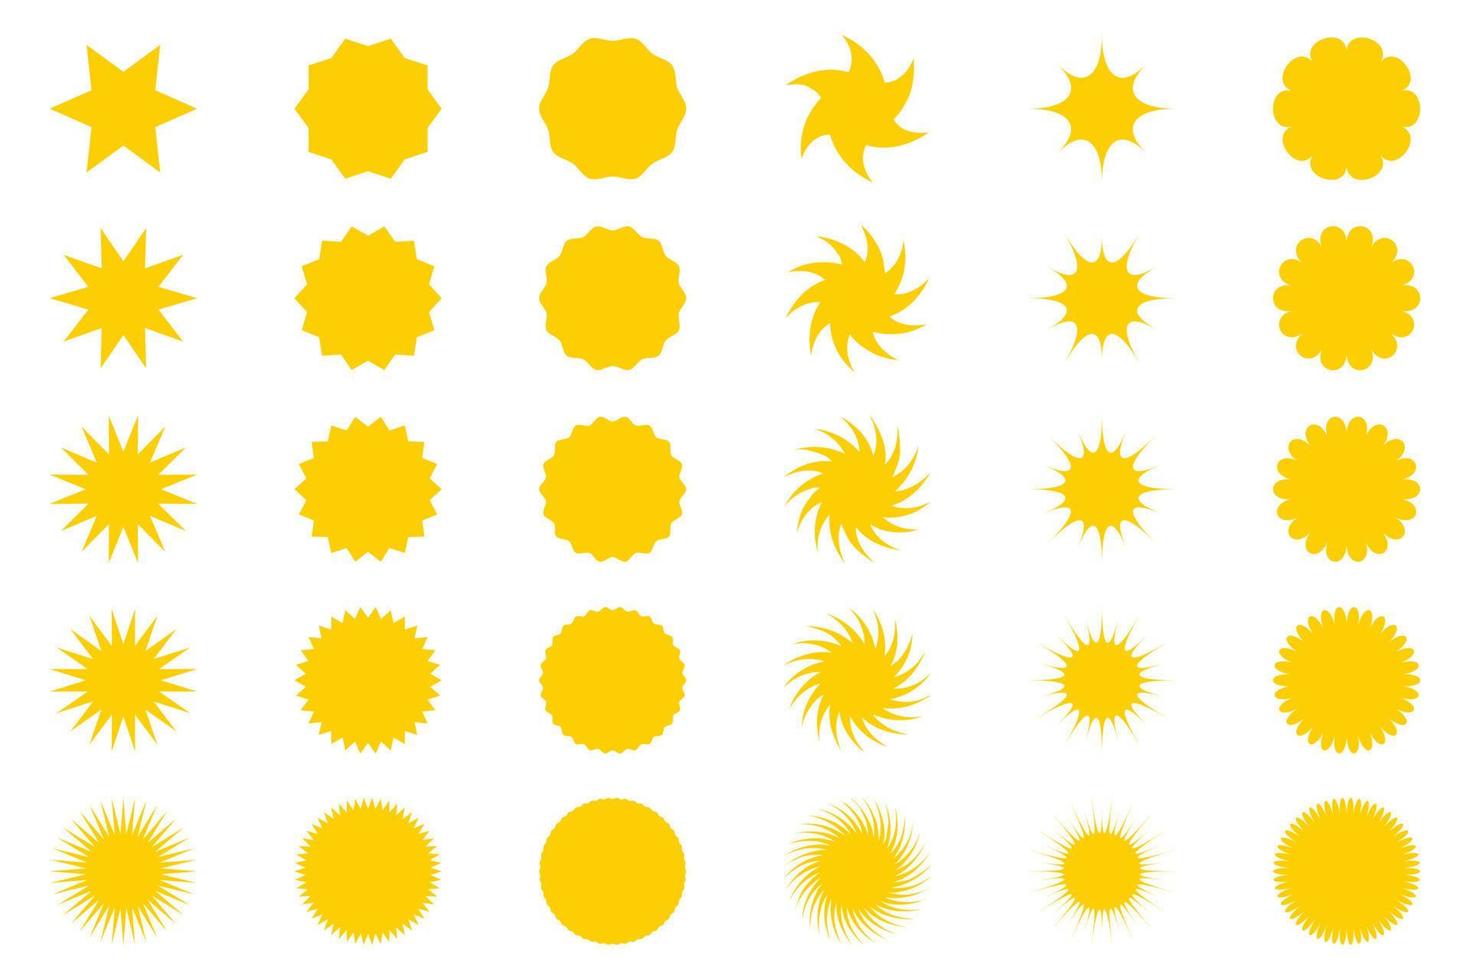 conjunto de adesivos de venda em forma de estrela ou sol amarelo. notas adesivas e etiquetas promocionais. vetor